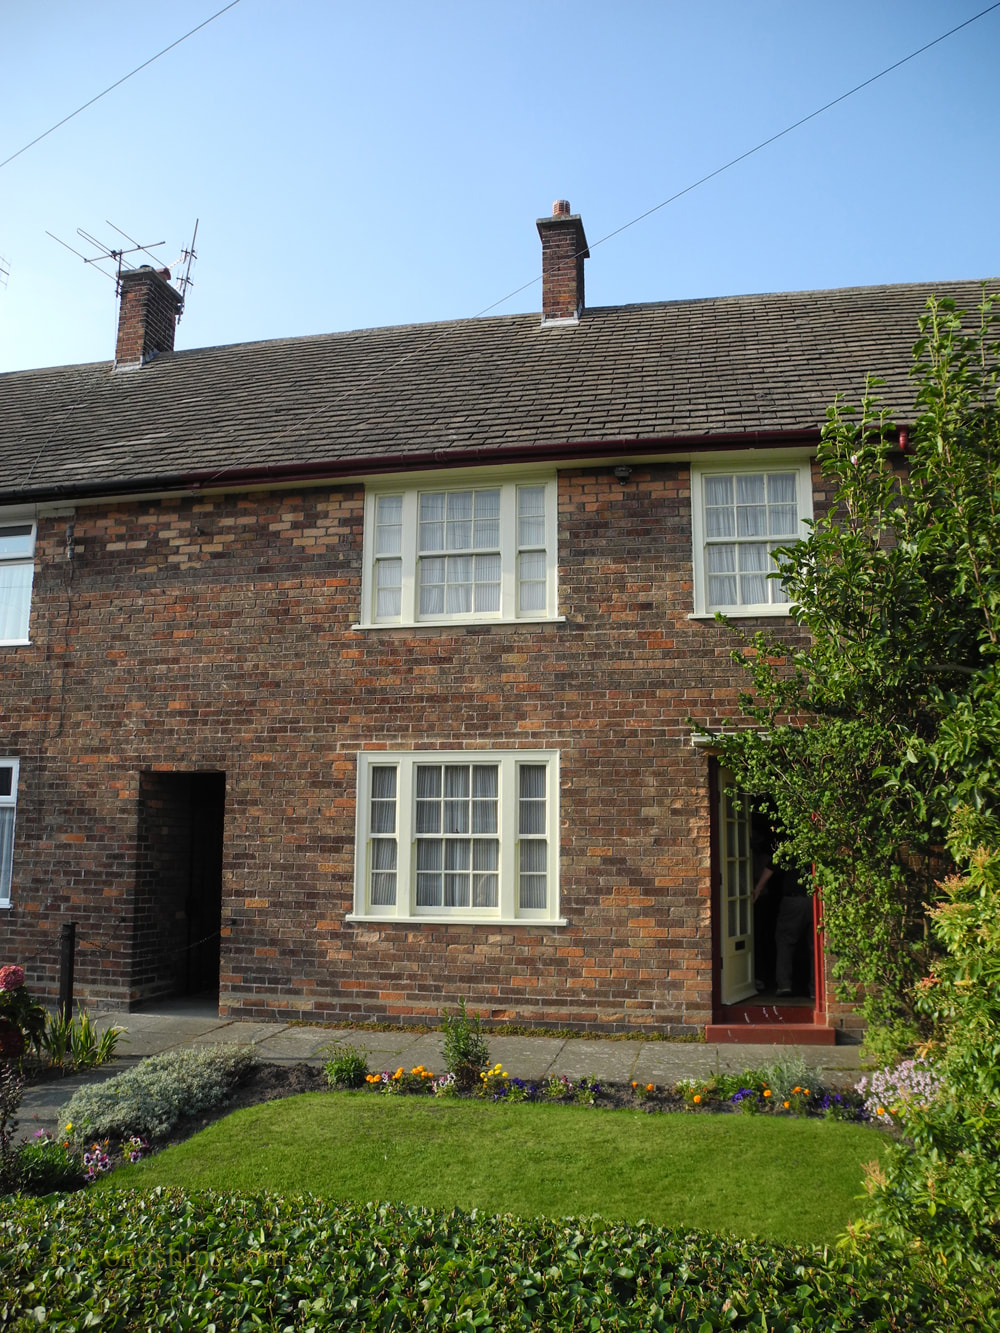 Beatle Paul McCartney's boyhood home, 20 Forthlin Road, Liverpool England